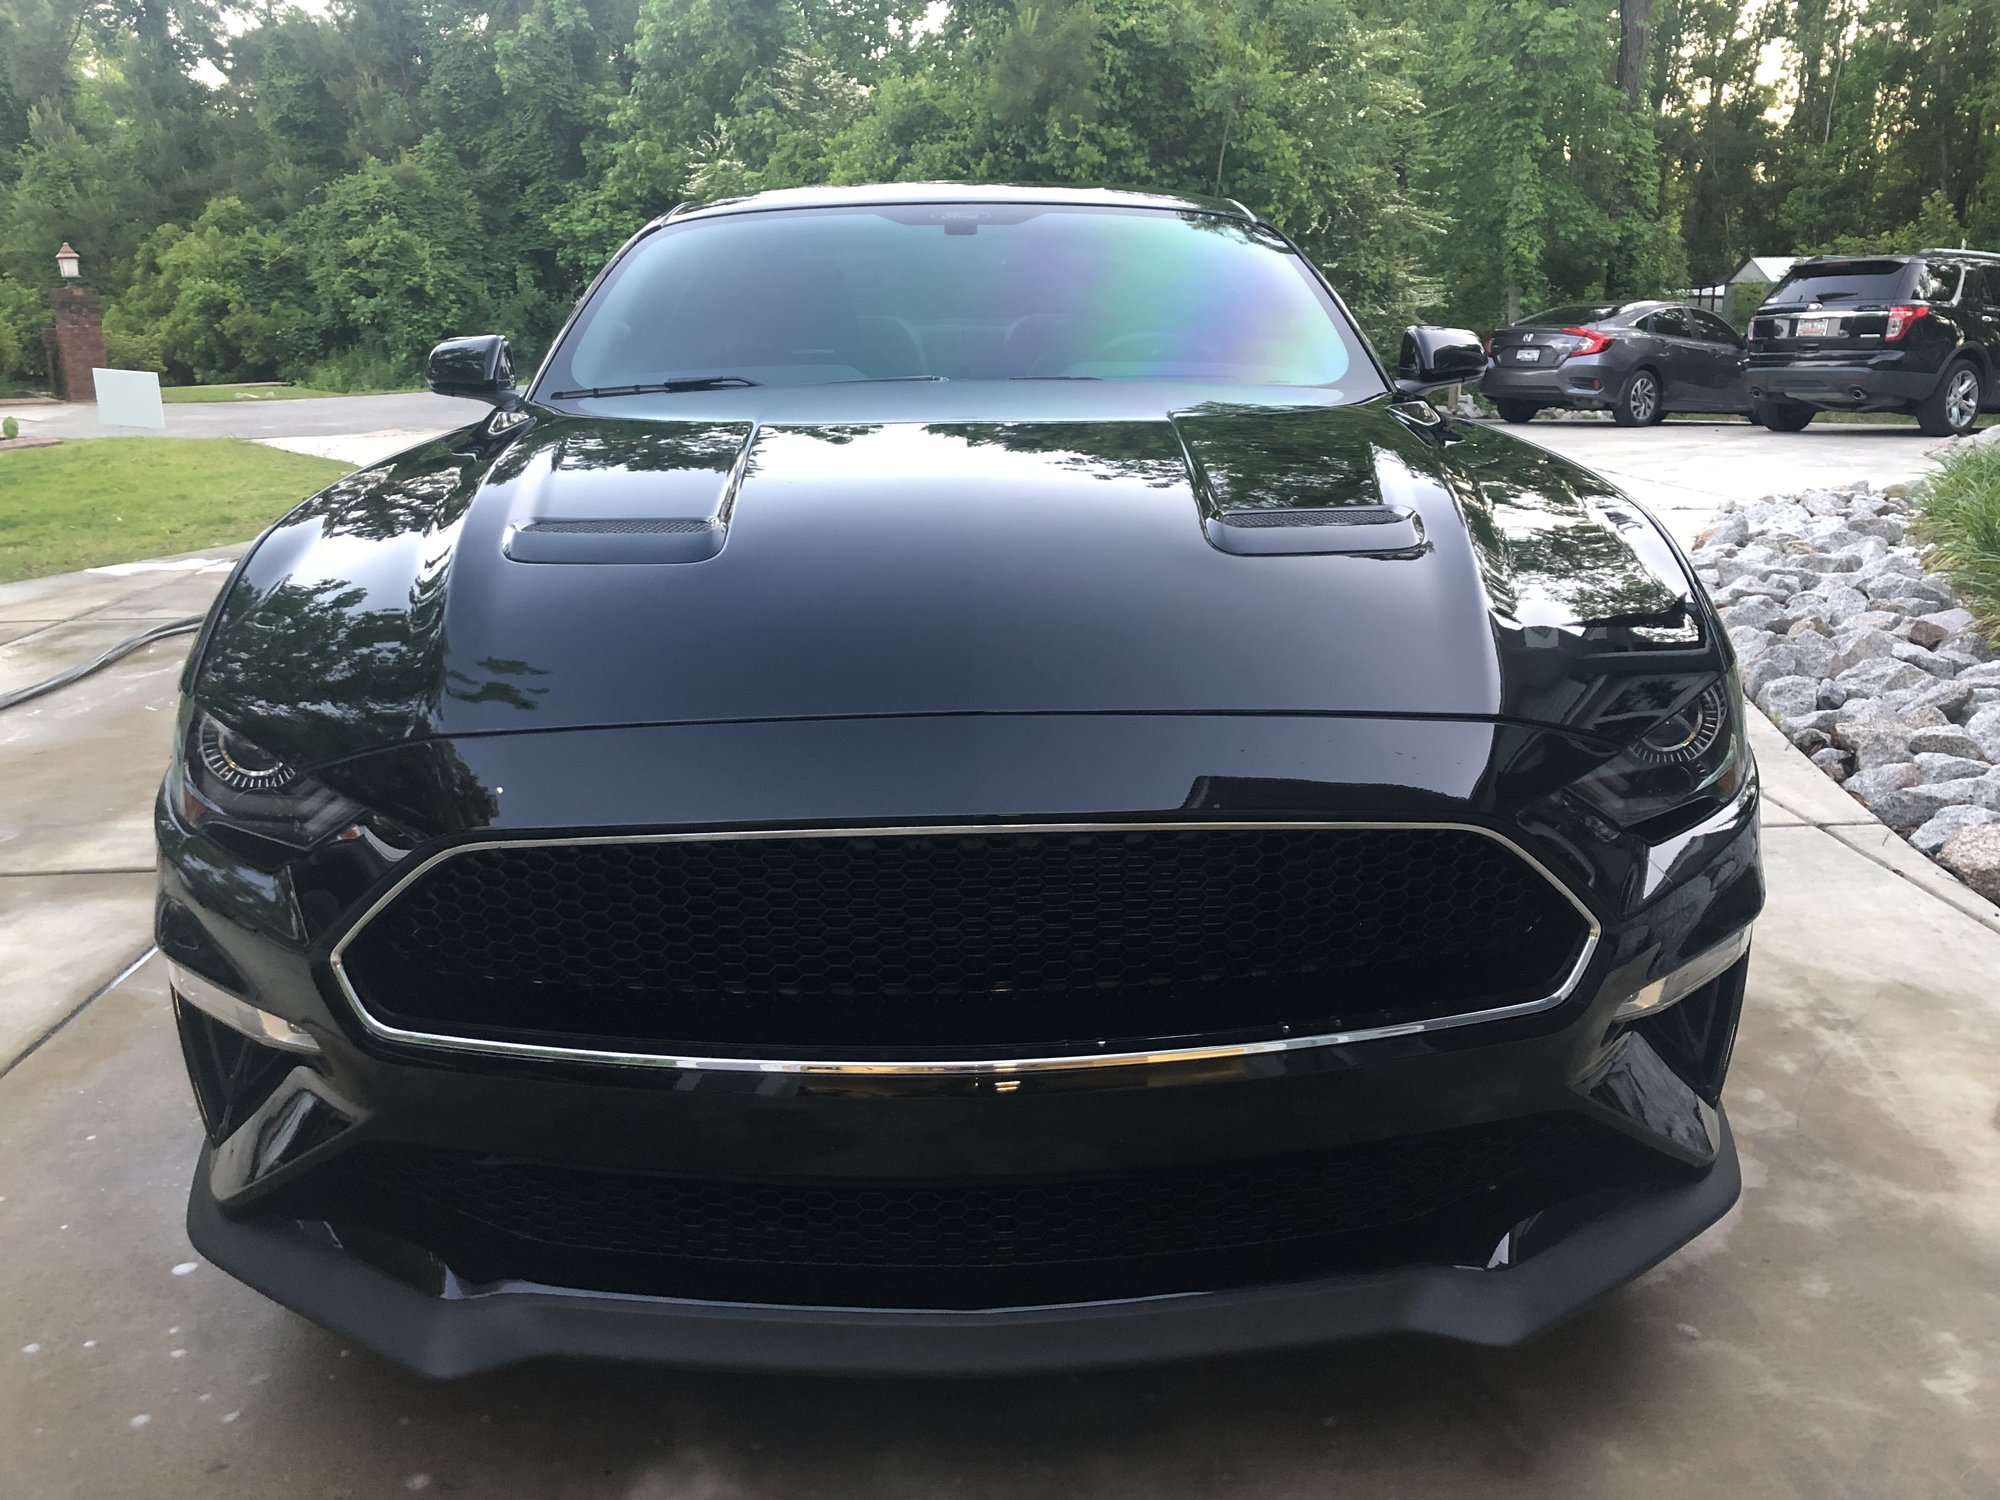 2019 Mustang
GT  (Dvic Stang)